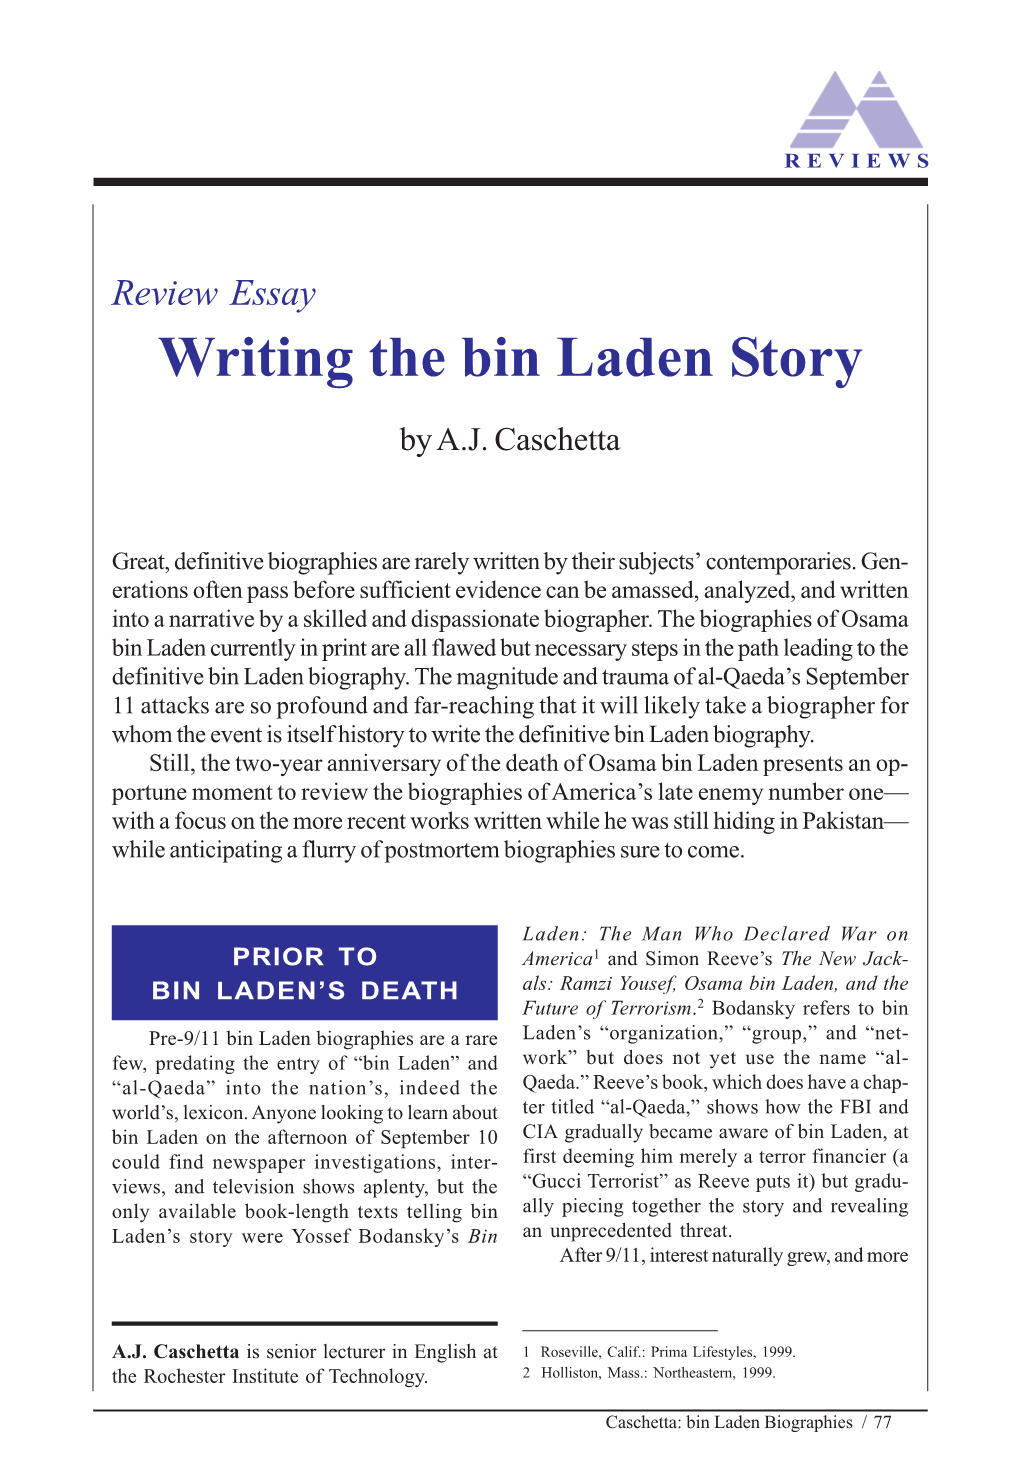 Writing the Bin Laden Story